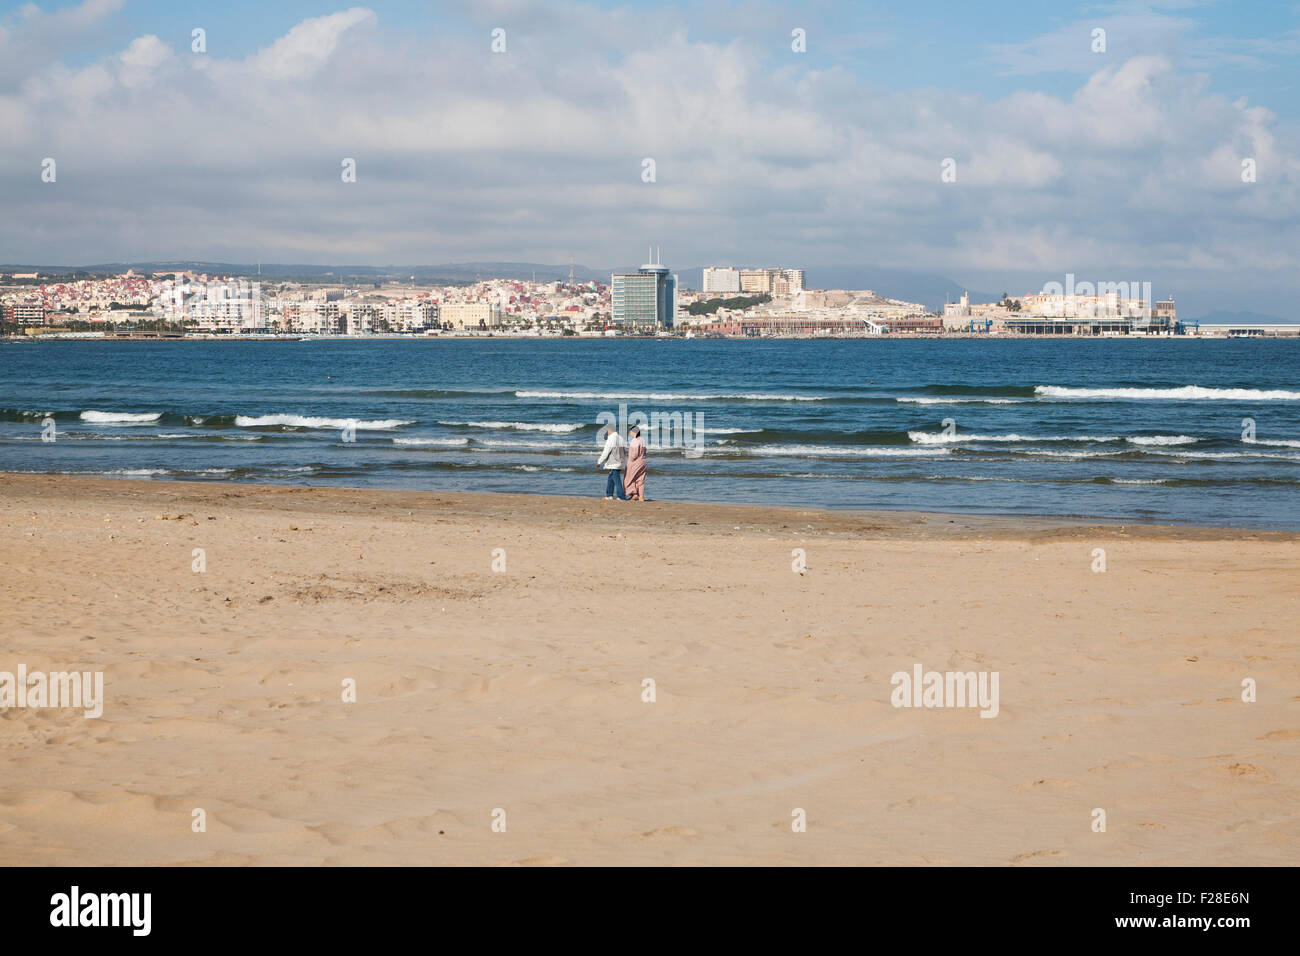 Sandy beach and sea Melilla autonomous city state Spanish territory in north Africa, Spain Stock Photo